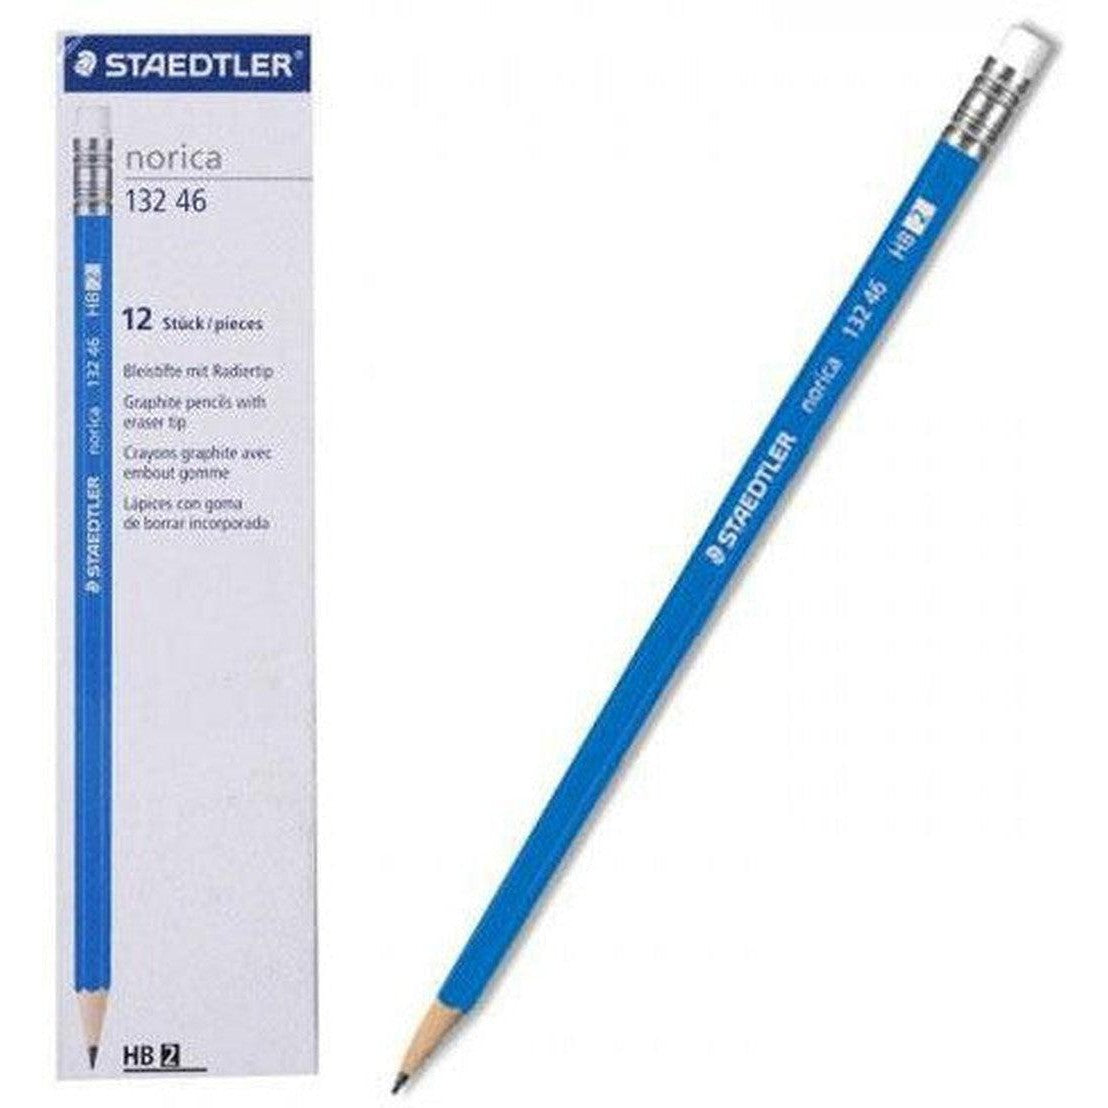 Staedtler Norica Graphite Pencil With Eraser Tip - 132 46 - Hb 2 (12Pcs/Pkt)-Pencils-Staedtler-Star Light Kuwait